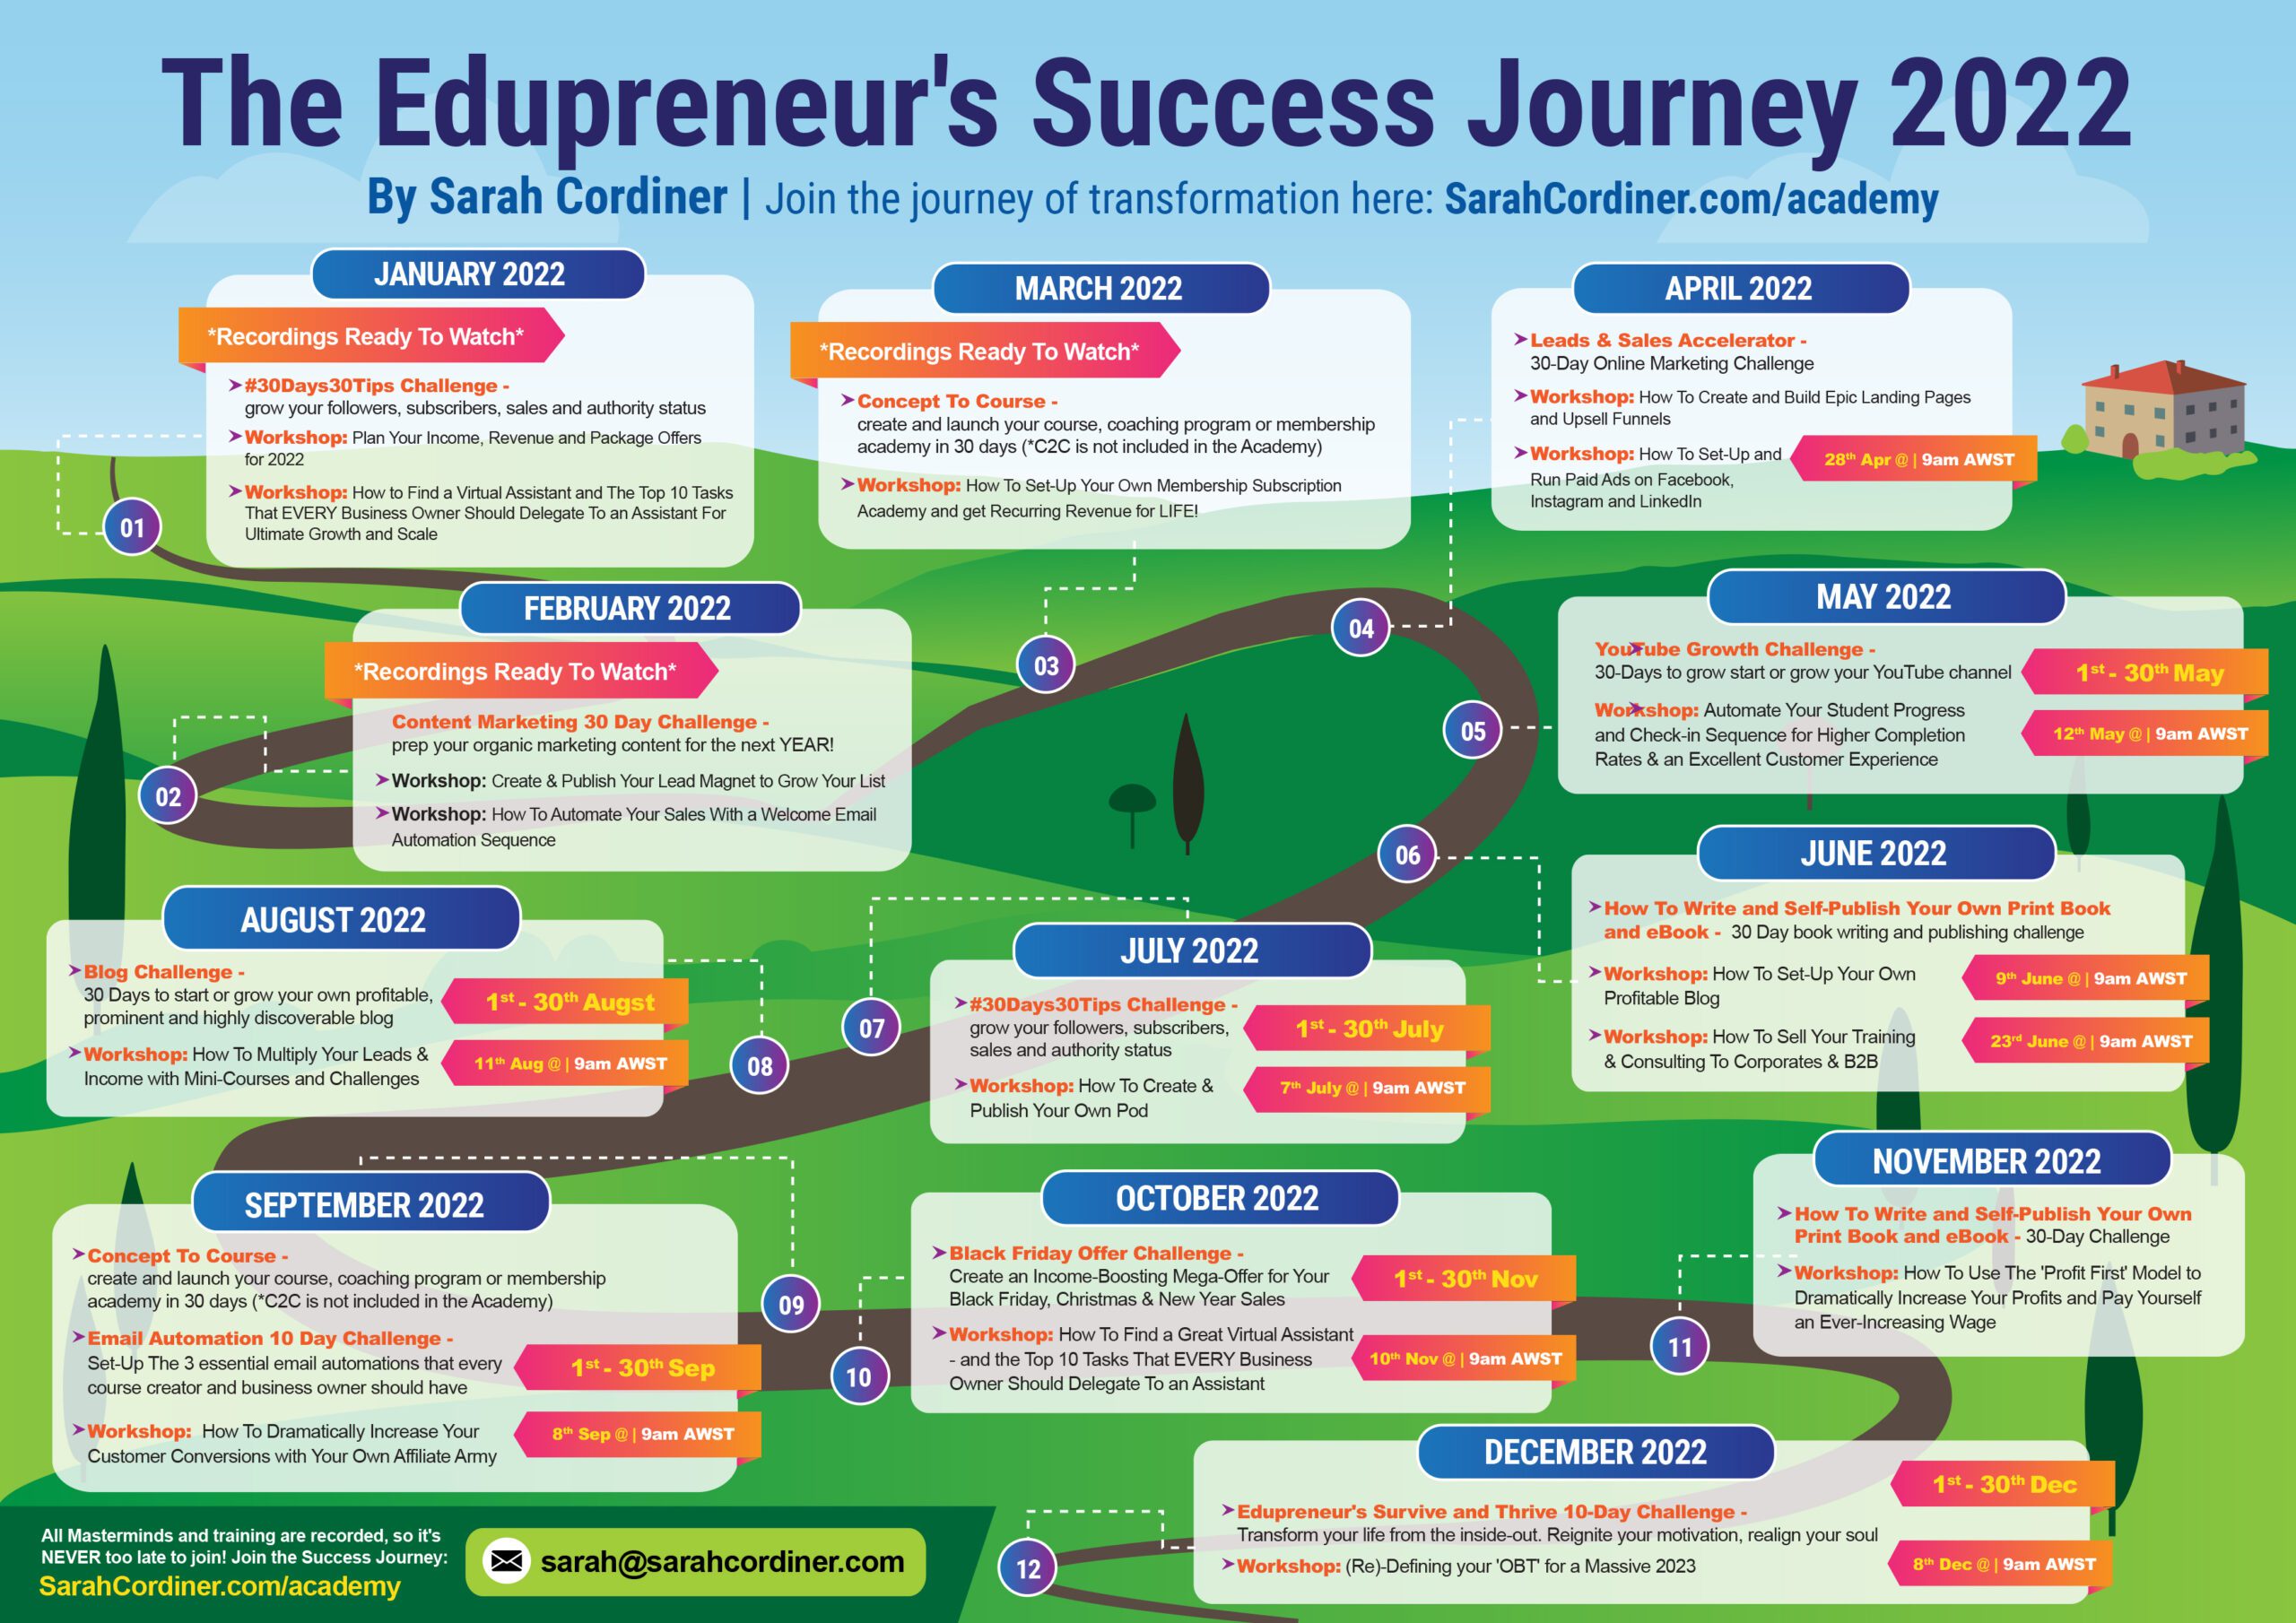 Sarah Cordiner's Edupreneur Success Journey Map 2022